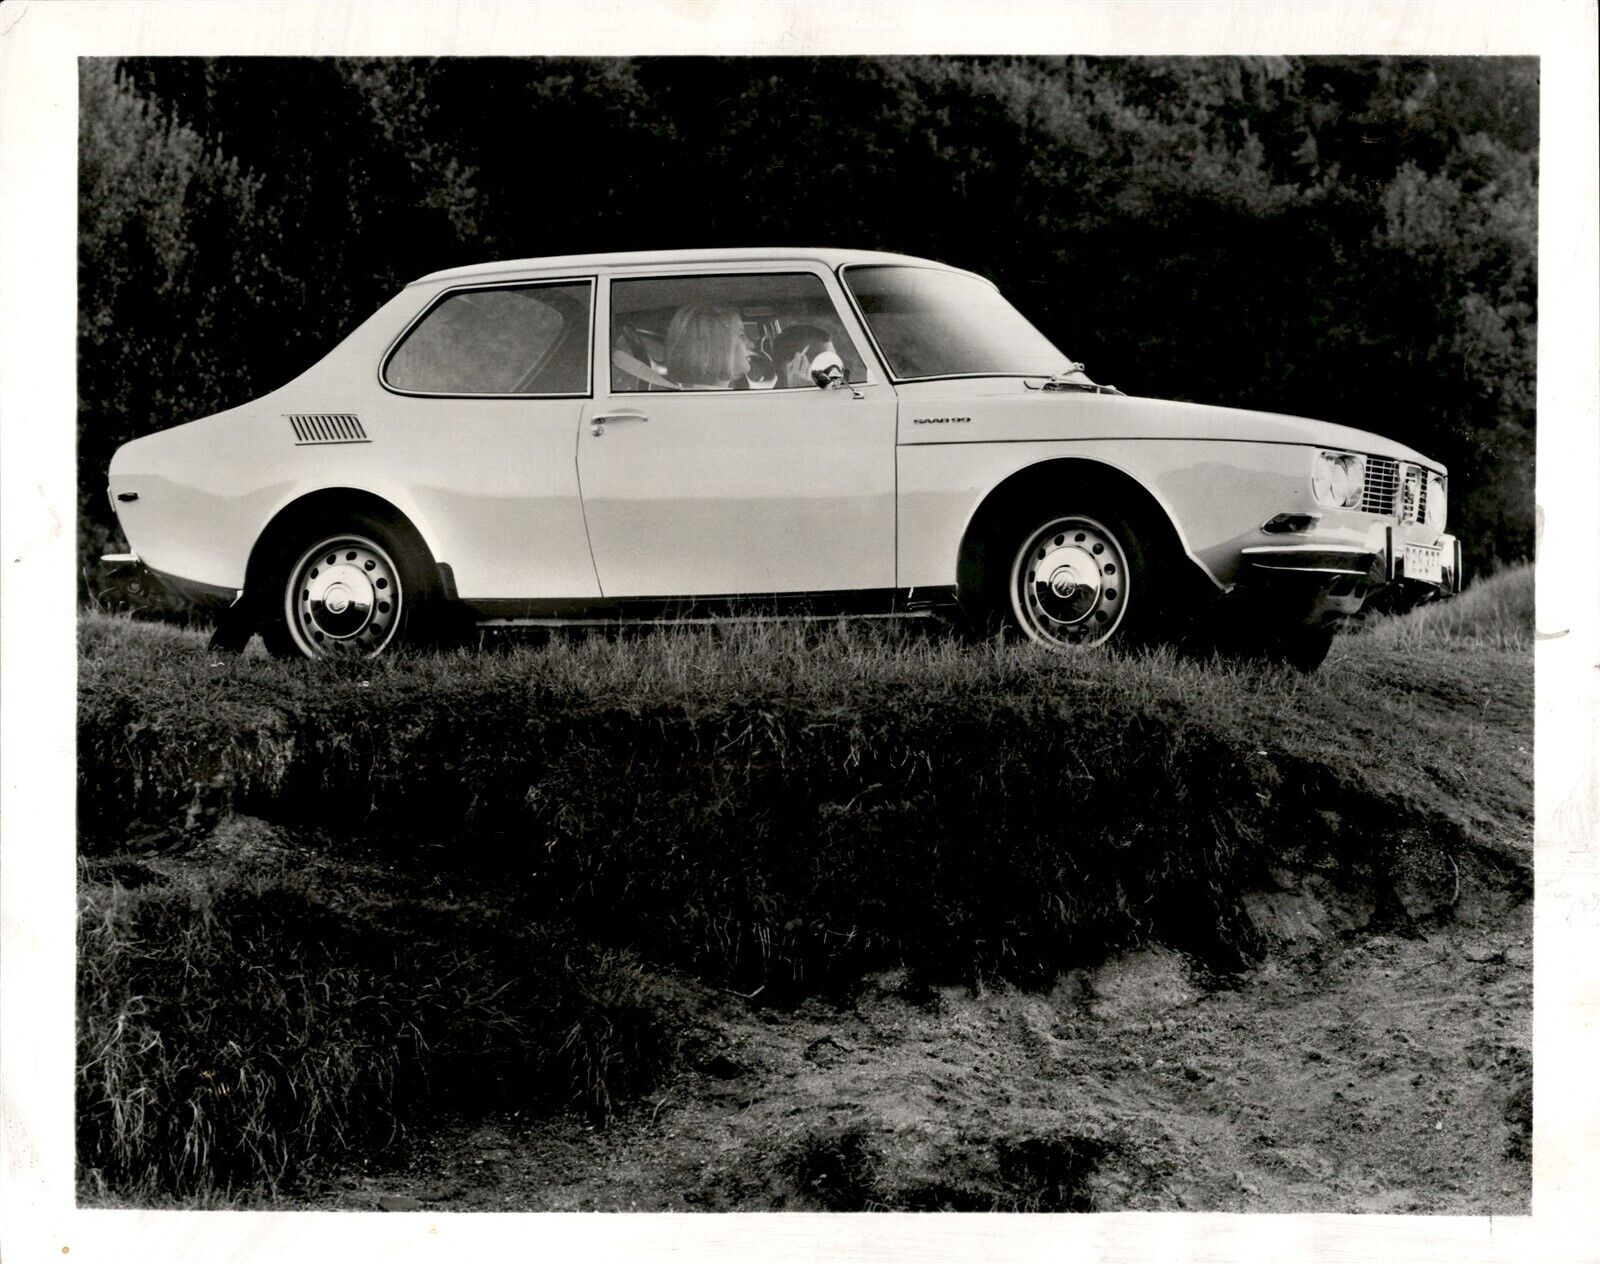 LG62 1969 Original Photo SAAB 99 RADICALLY NEW CAR FROM SWEDEN CLASSIC SEDAN